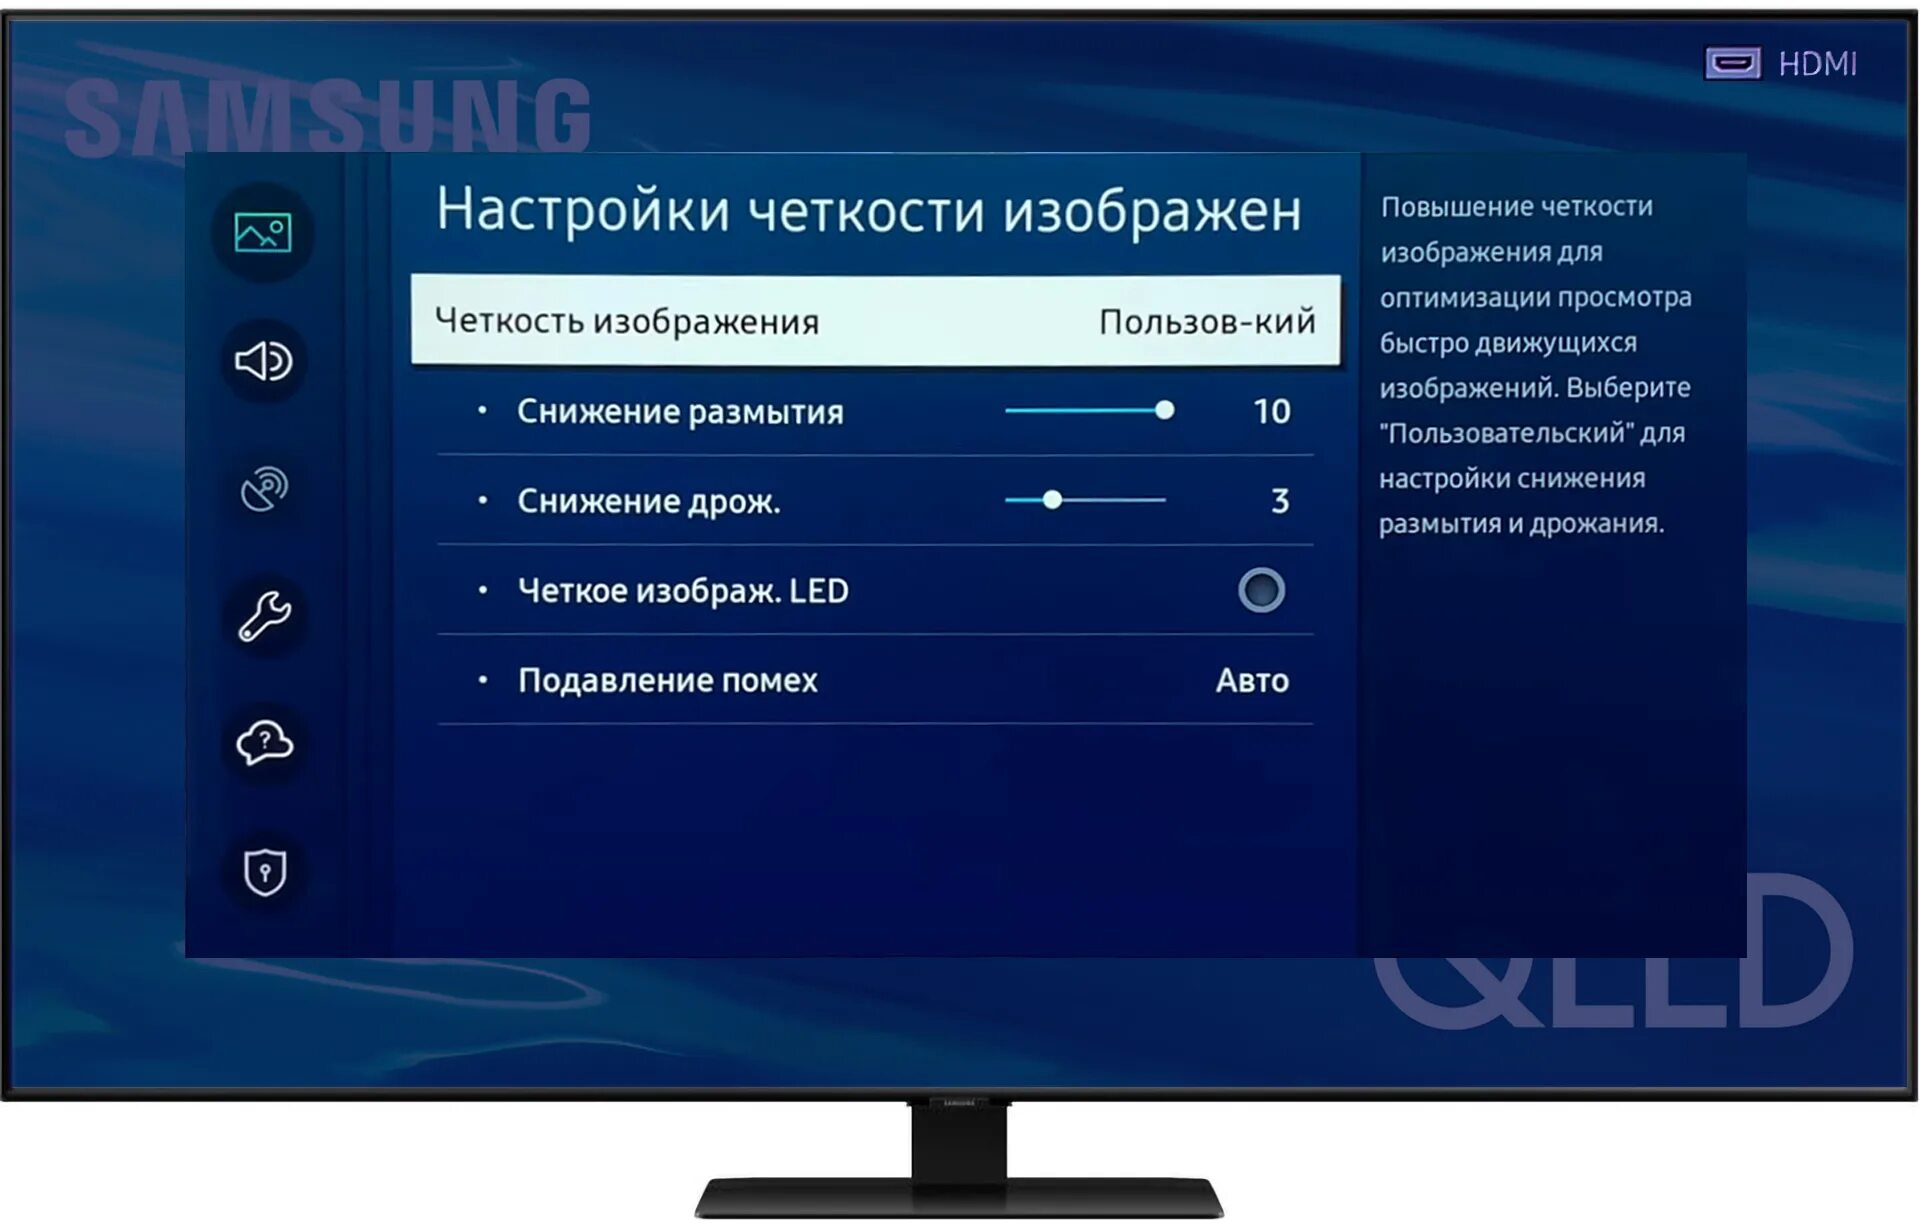 Параметры изображения телевизора. Настройки изображения телевизора Samsung. Экран настройки телевизора. Настройка изображения телевизора.